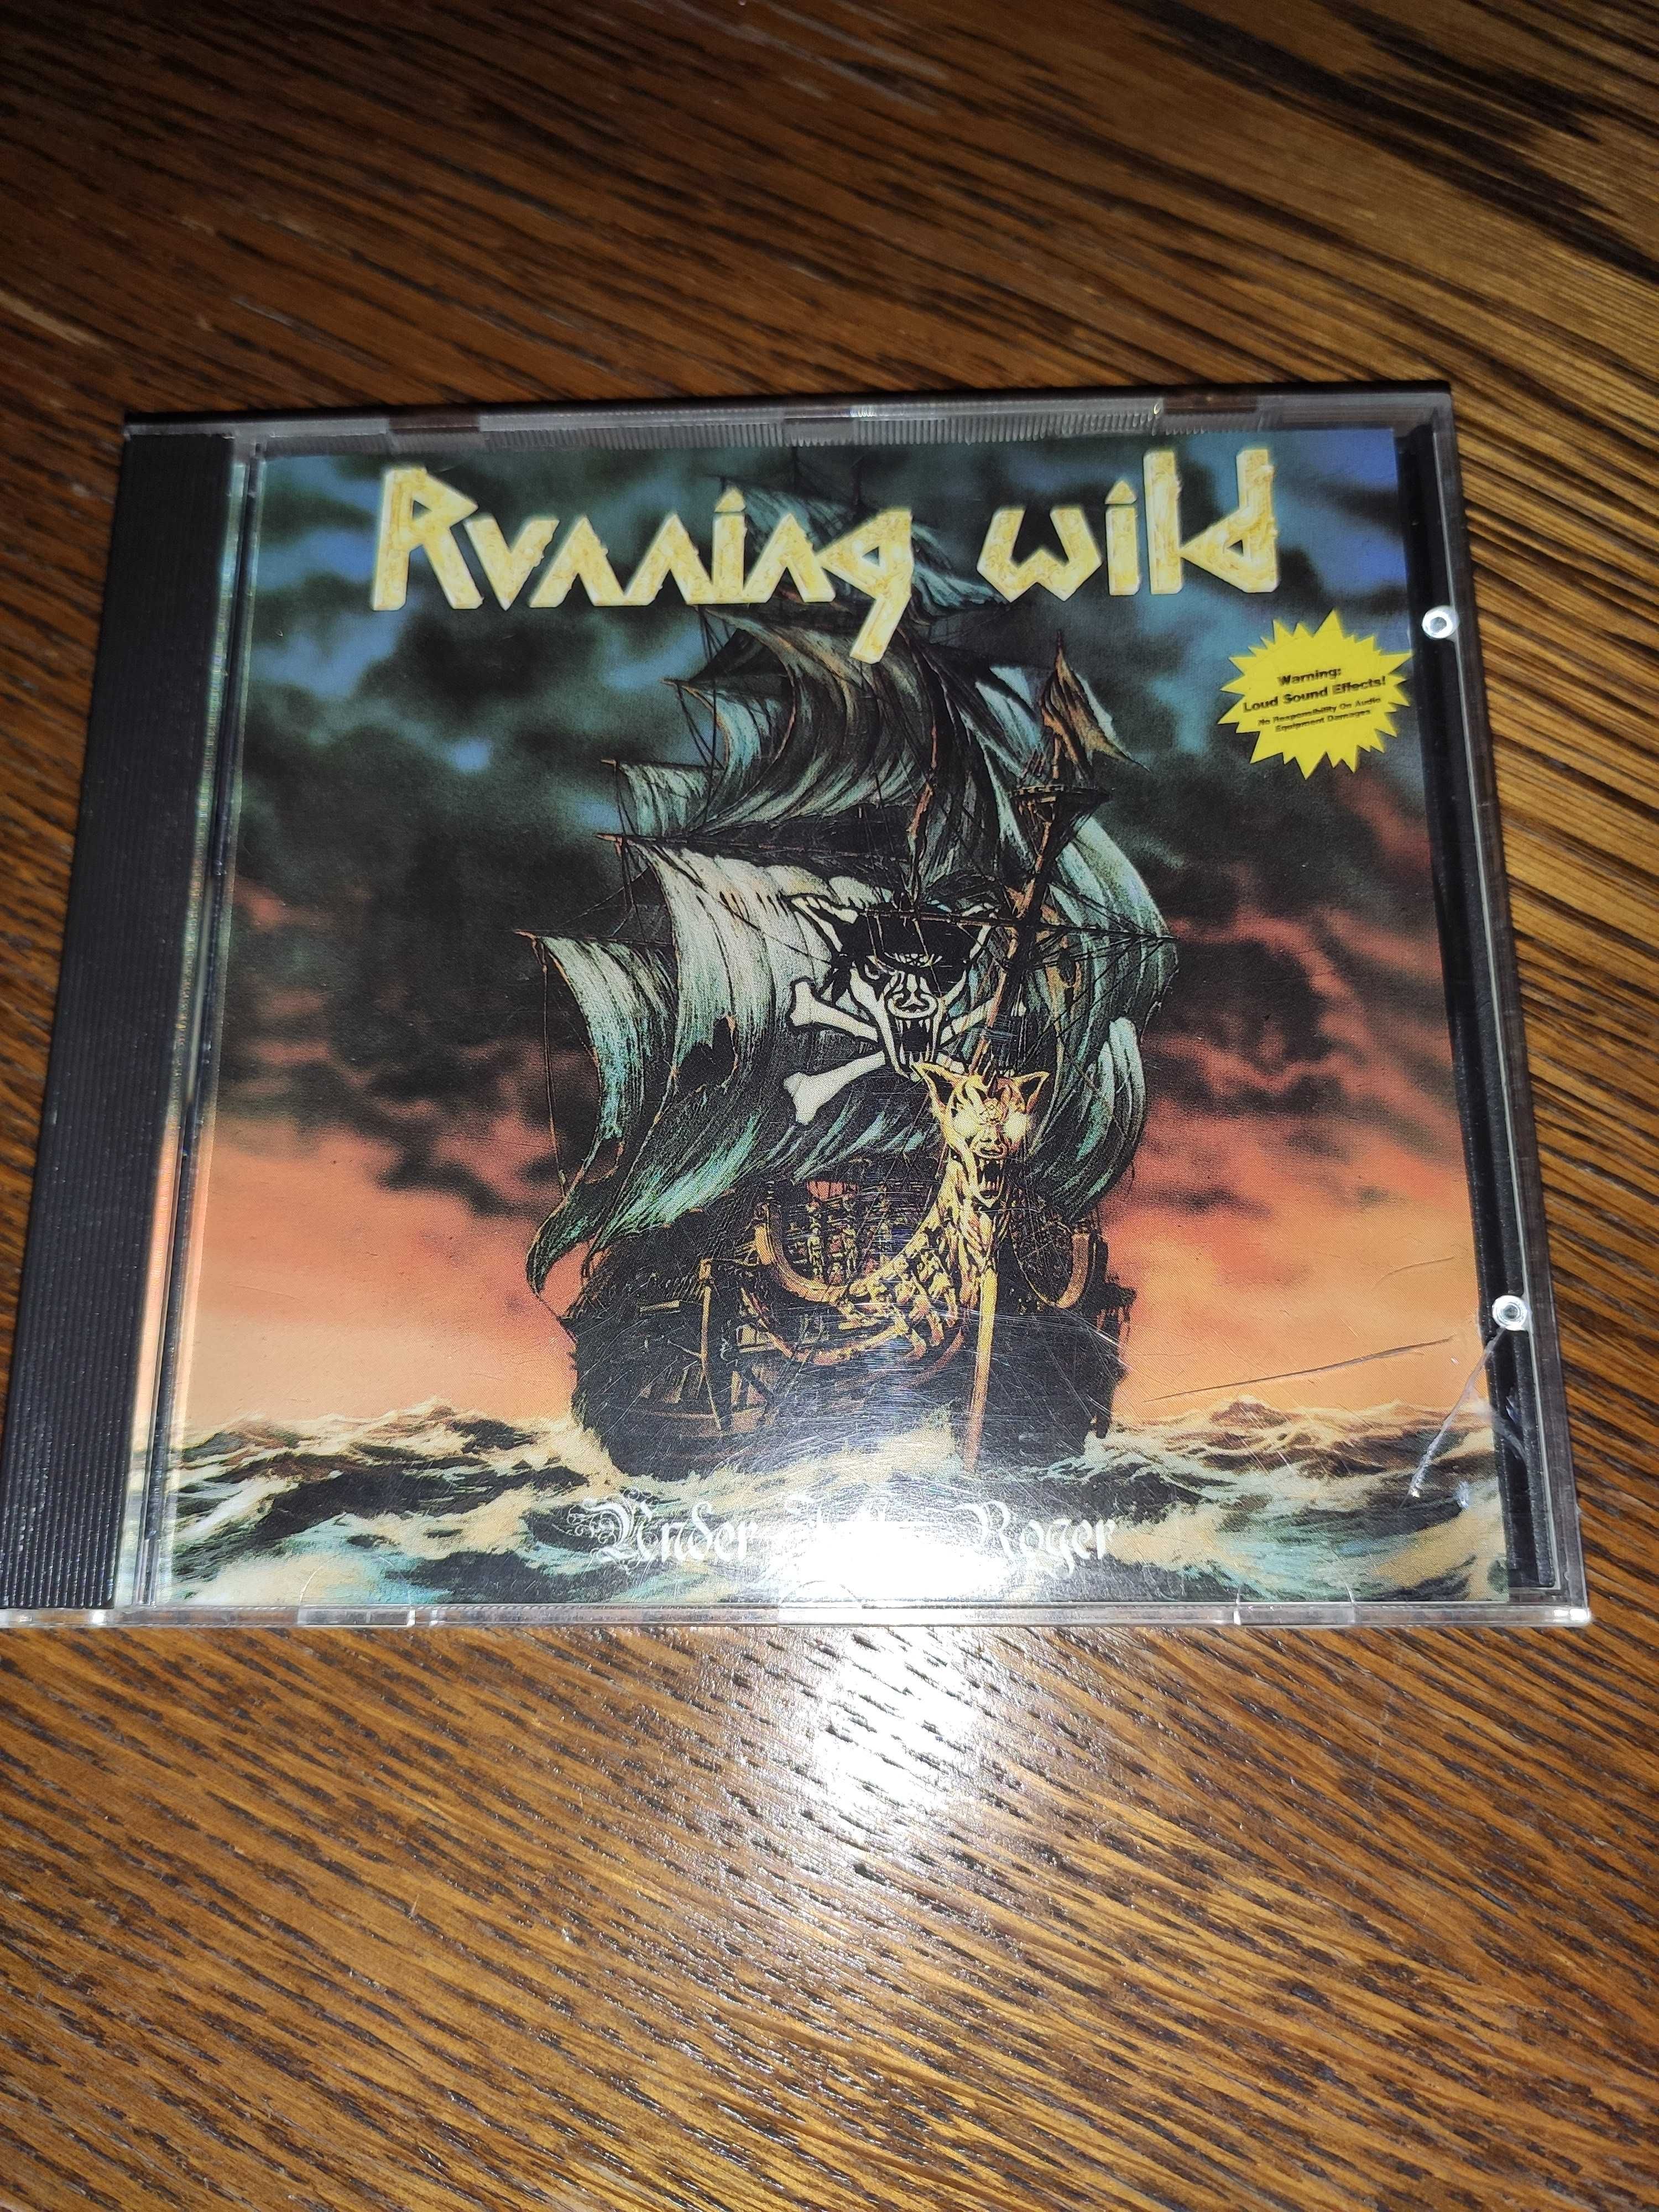 Running Wild - Under Jolly Roger, CD 1995, France by MPO